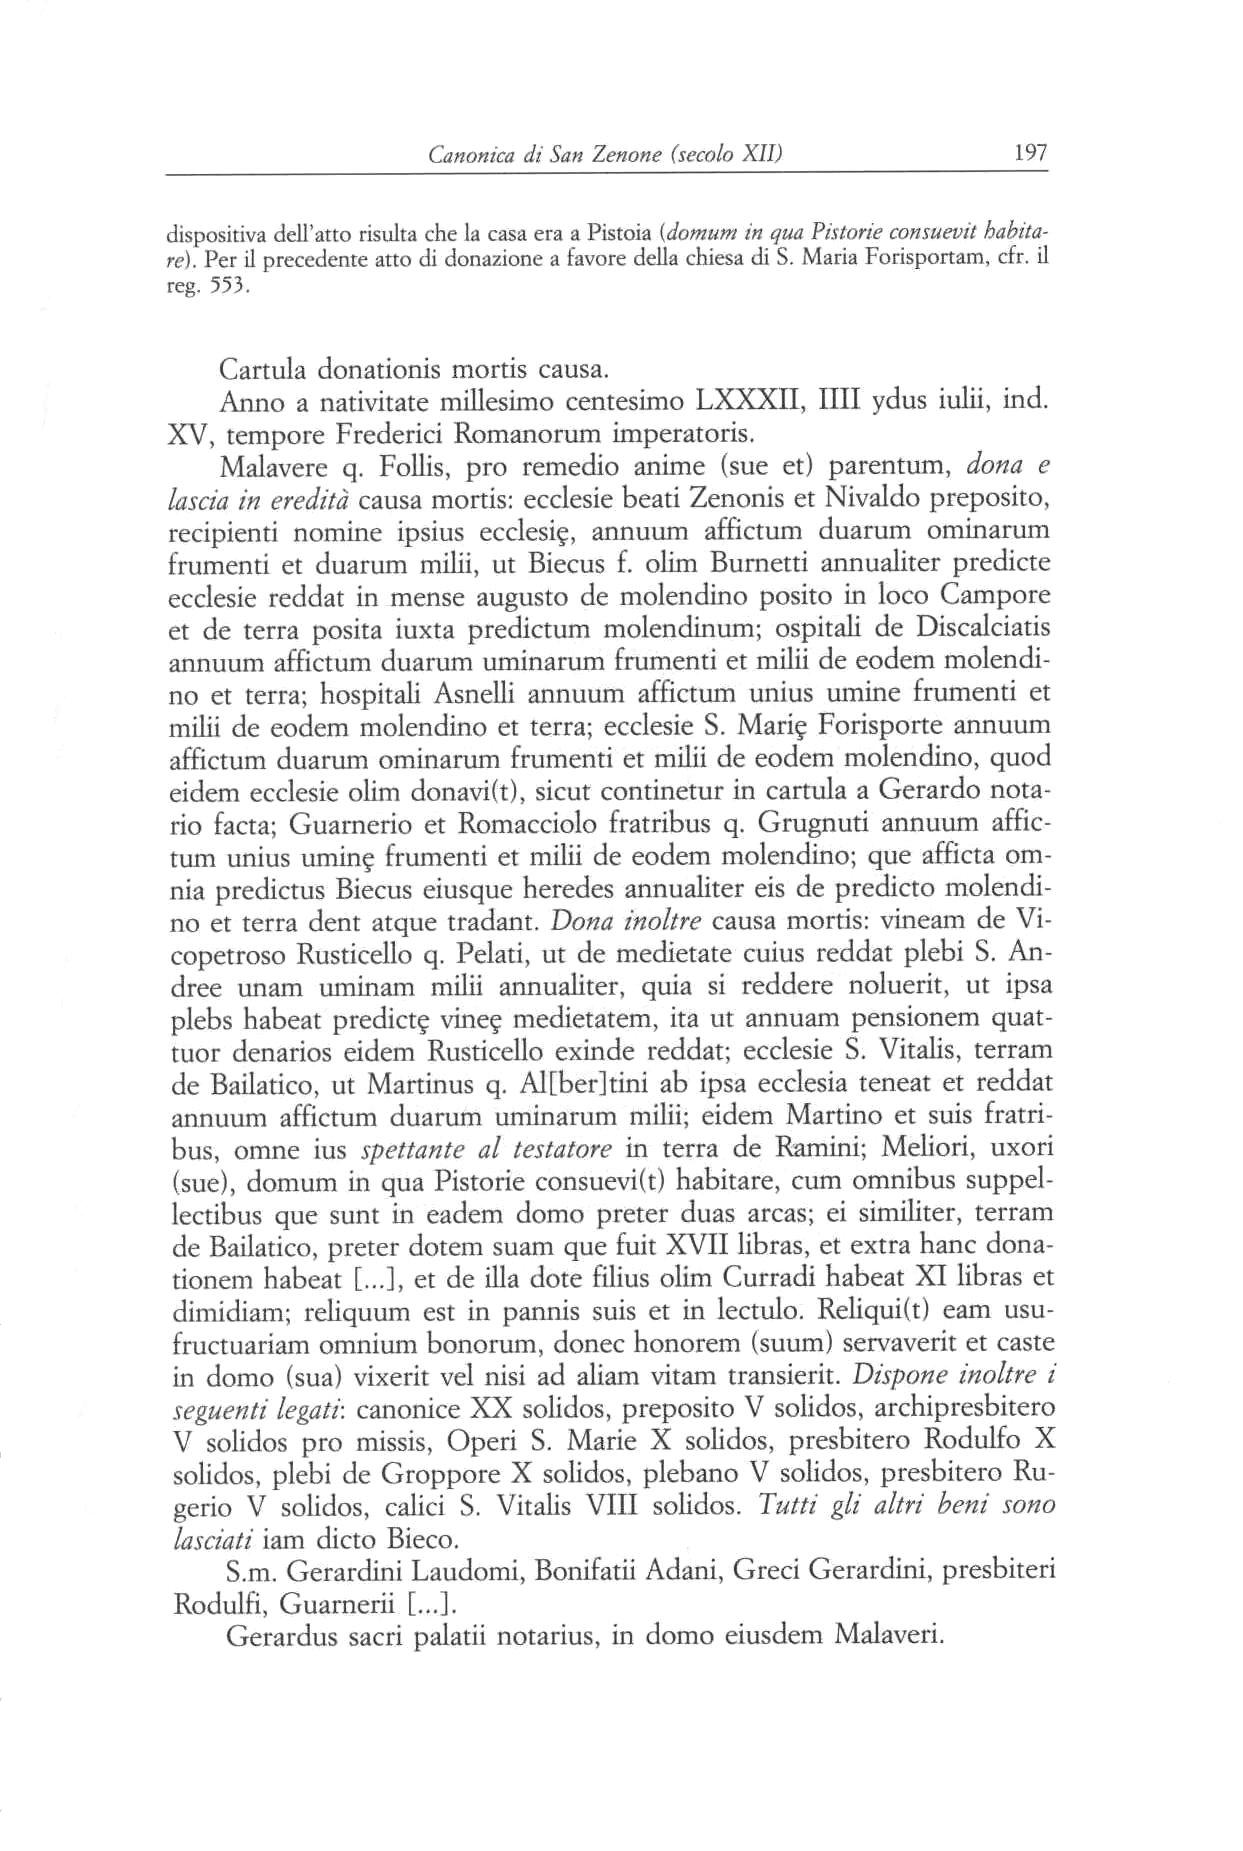 Canonica S. Zenone XII 0197.jpg